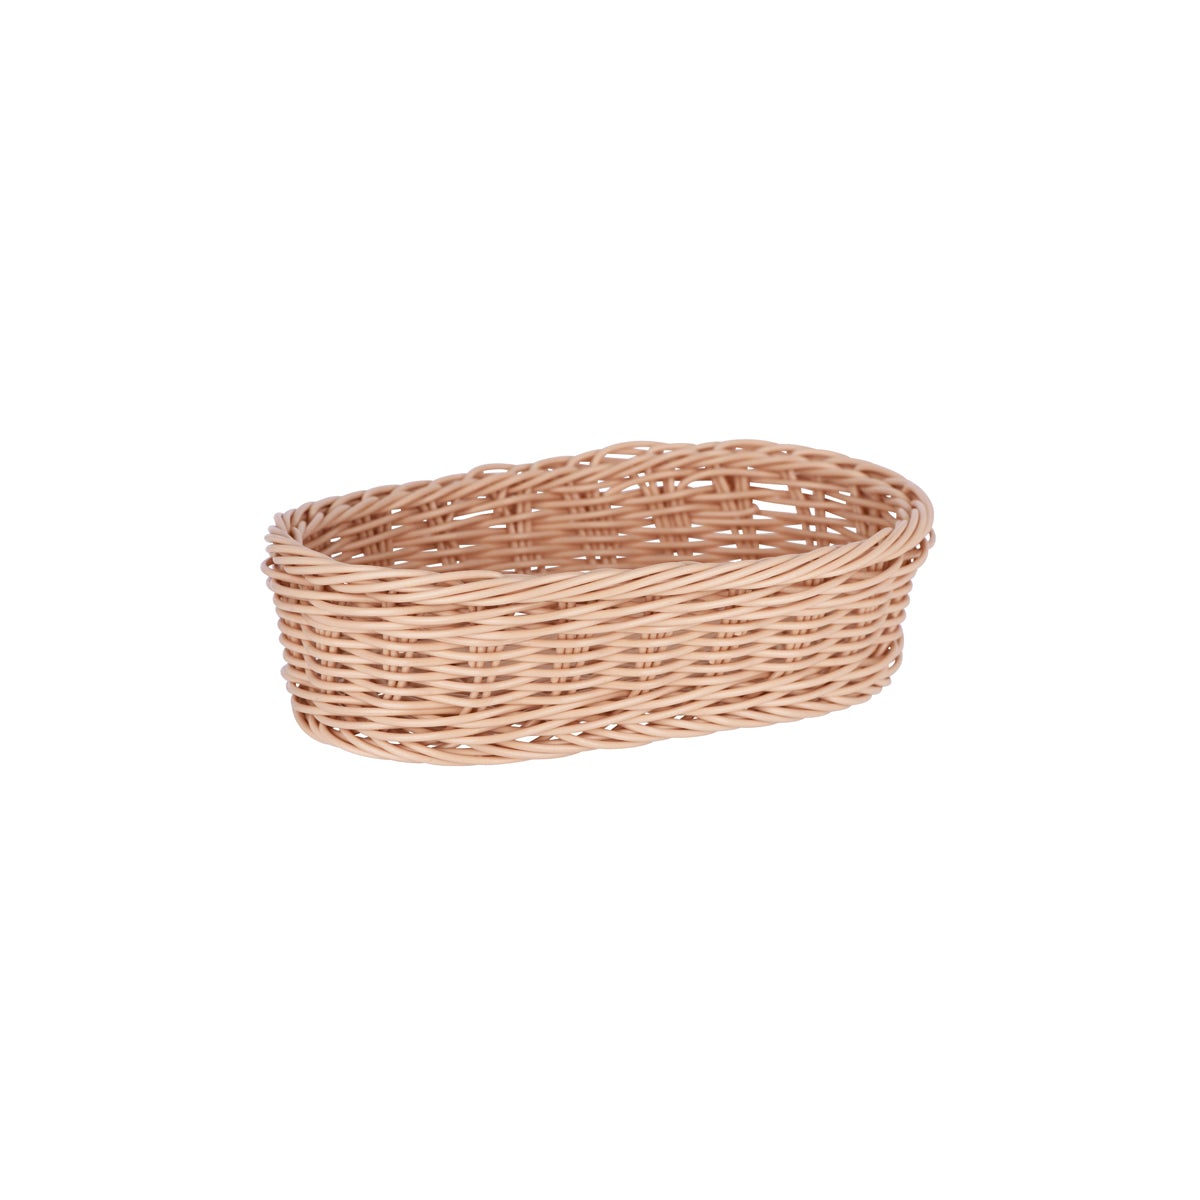 '04060 Chef Inox Bread Basket Oval Polypropylene 230x160x70mm Tomkin Australia Hospitality Supplies